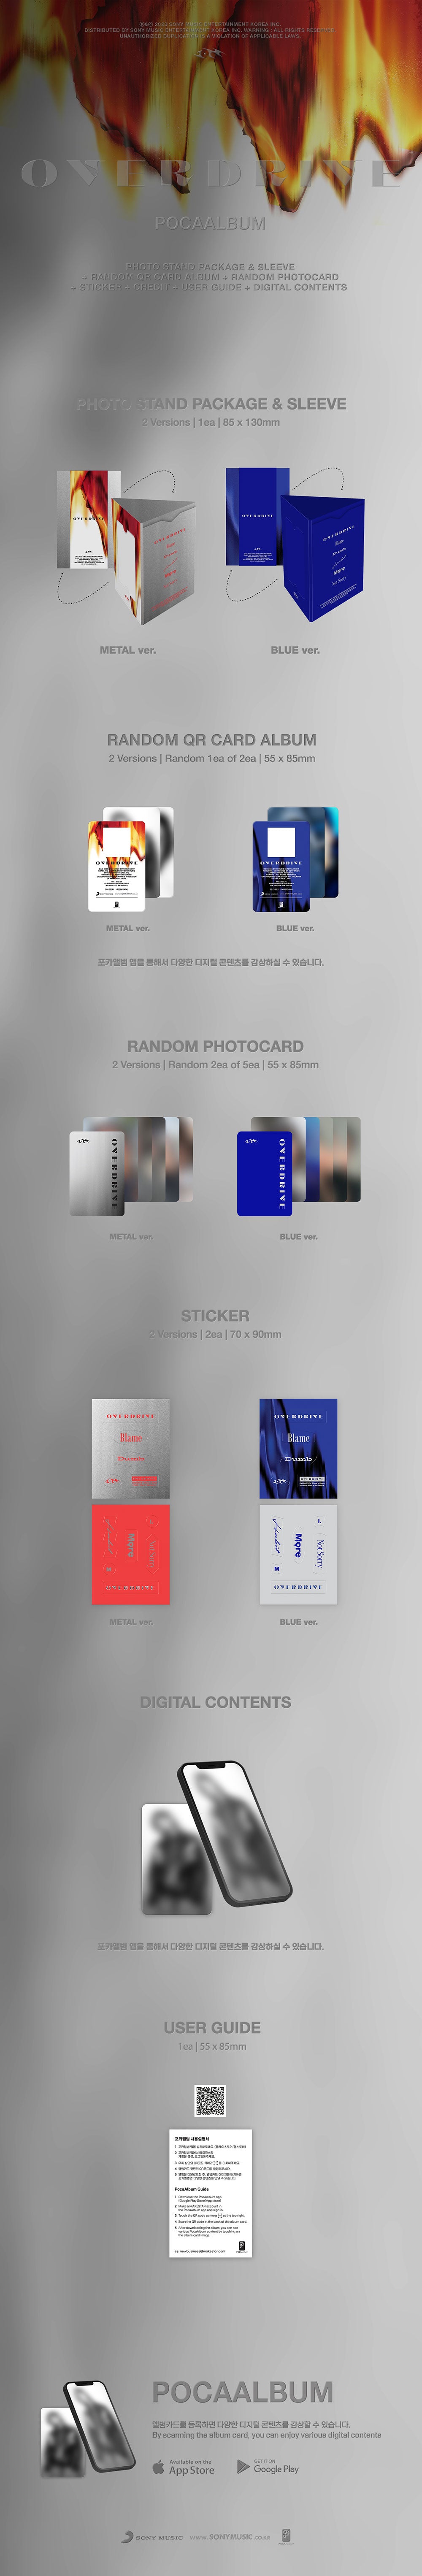 IM (MONSTA X) - OVERDRIVE (2nd EP Album) ポカアルバム2-SET